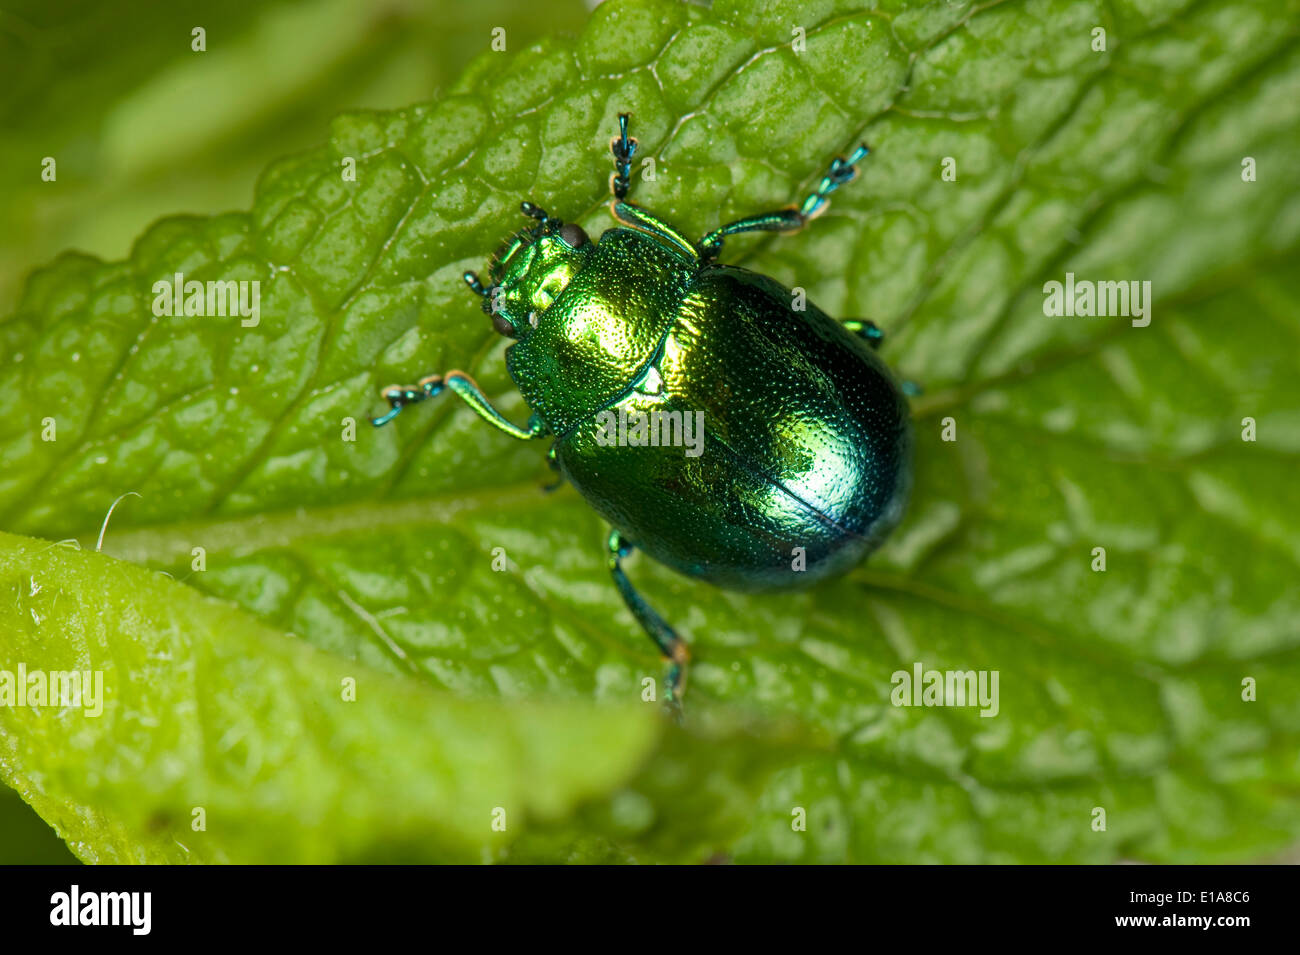 A mint leaf beetle, Chrysolina herbacea, on a mint leaf Stock Photo